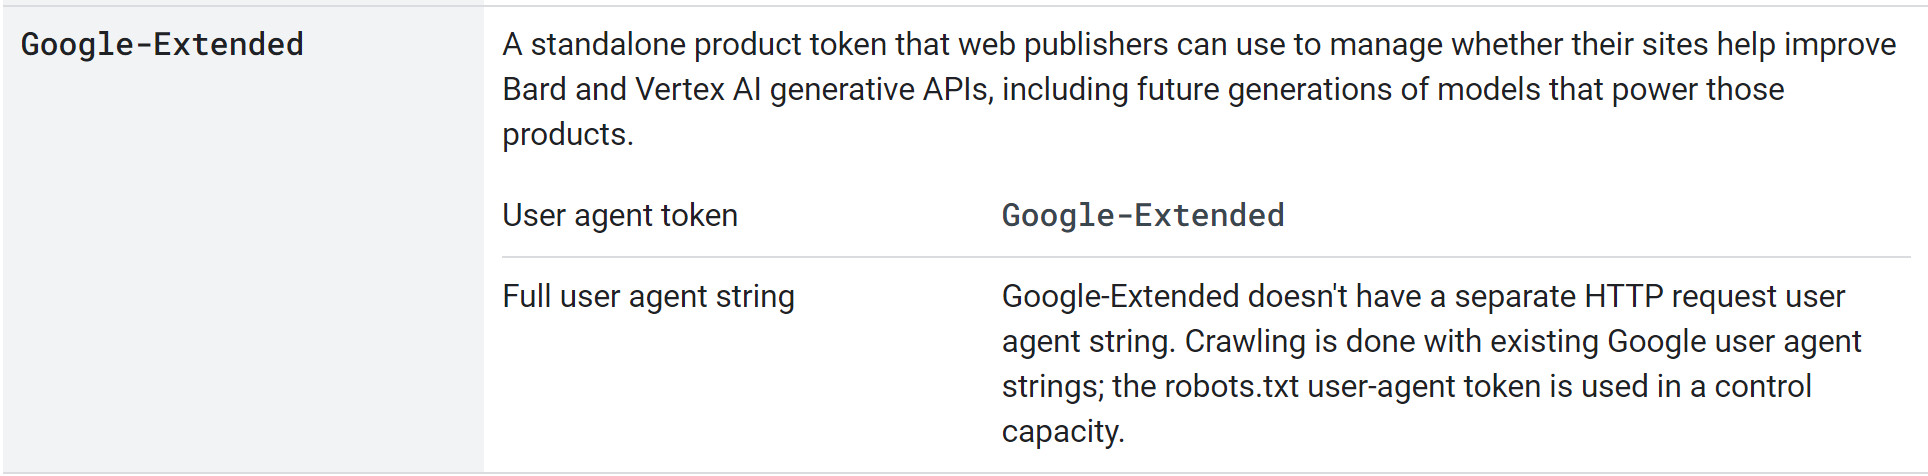 Google-Extended robots.txt